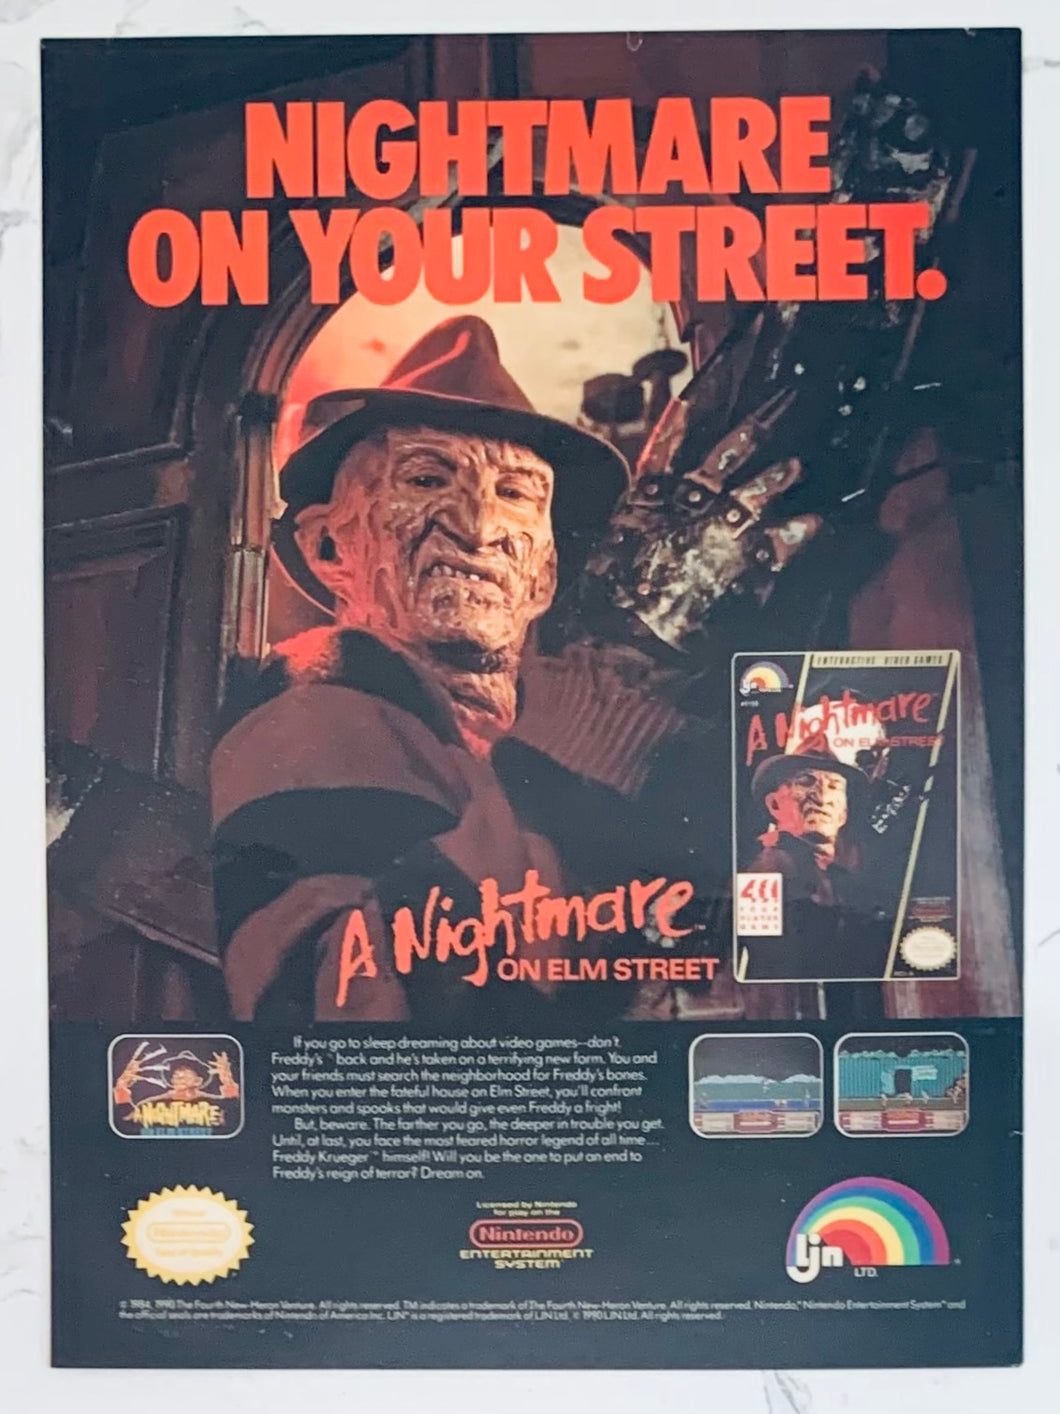 A Nightmare on Elm Street - NES - Original Vintage Advertisement - Print Ads - Laminated A4 Poster